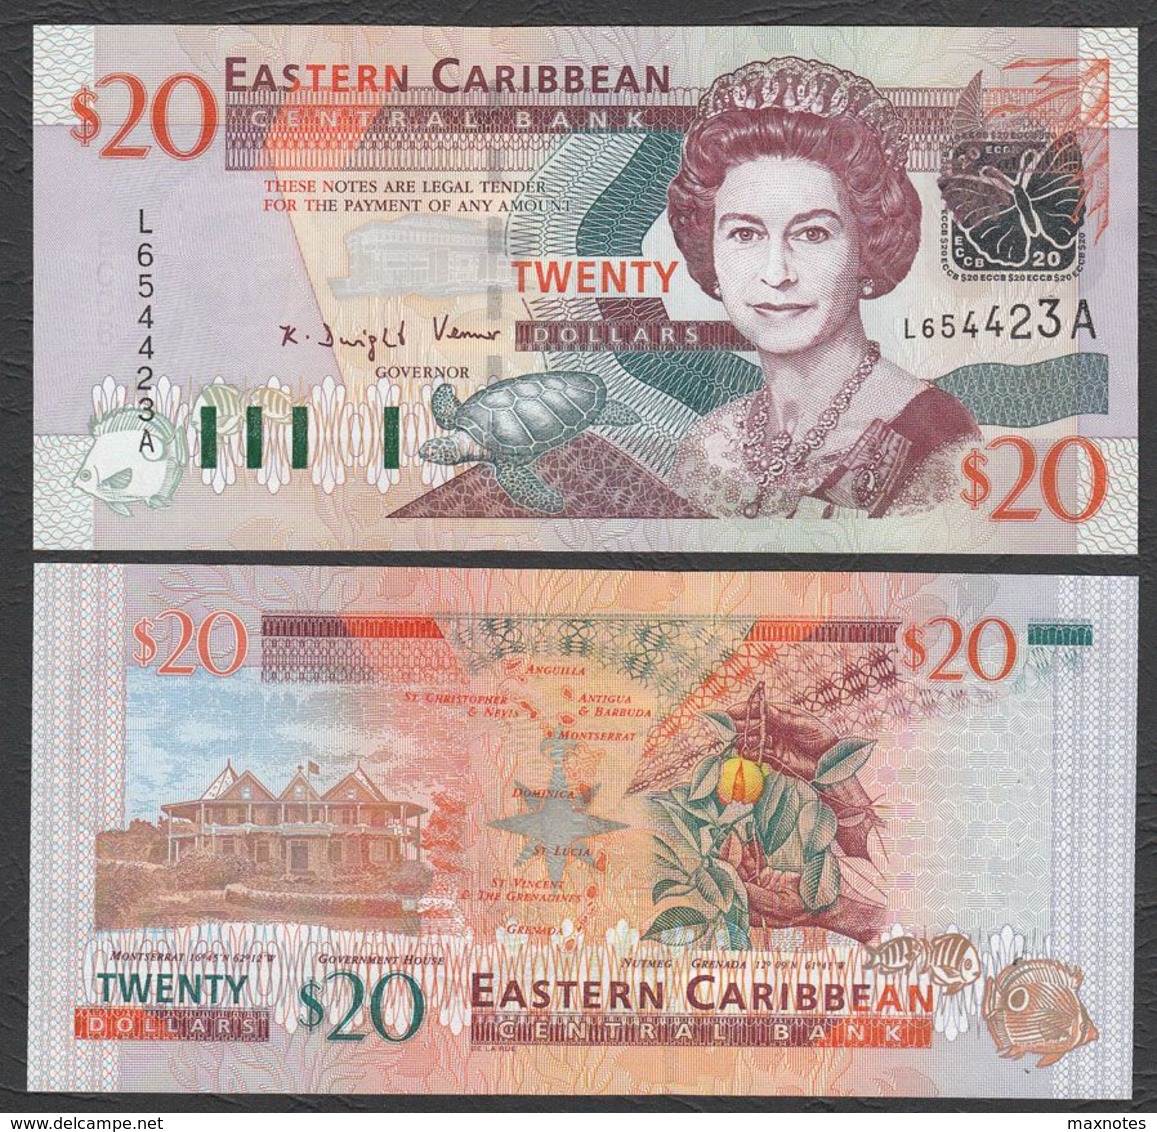 CARAIBI ORIENTALE (EASTERN CARIBBEAN) : 20 Dollars - P44a - ANTIGUA - Queen Elisabeth II - 2003 - UNC - East Carribeans